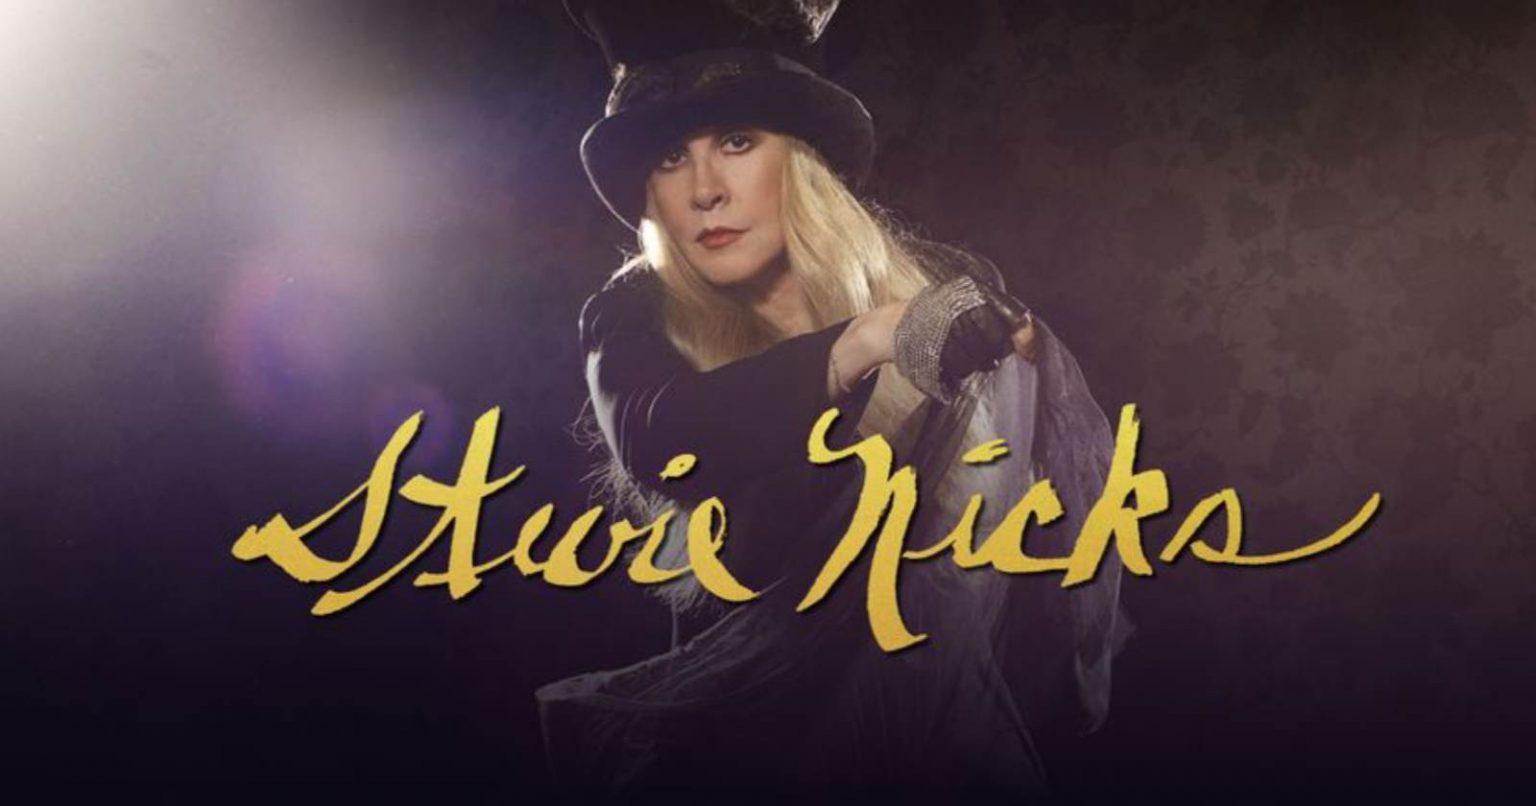 Stevie Nicks announces new 2022 tour dates